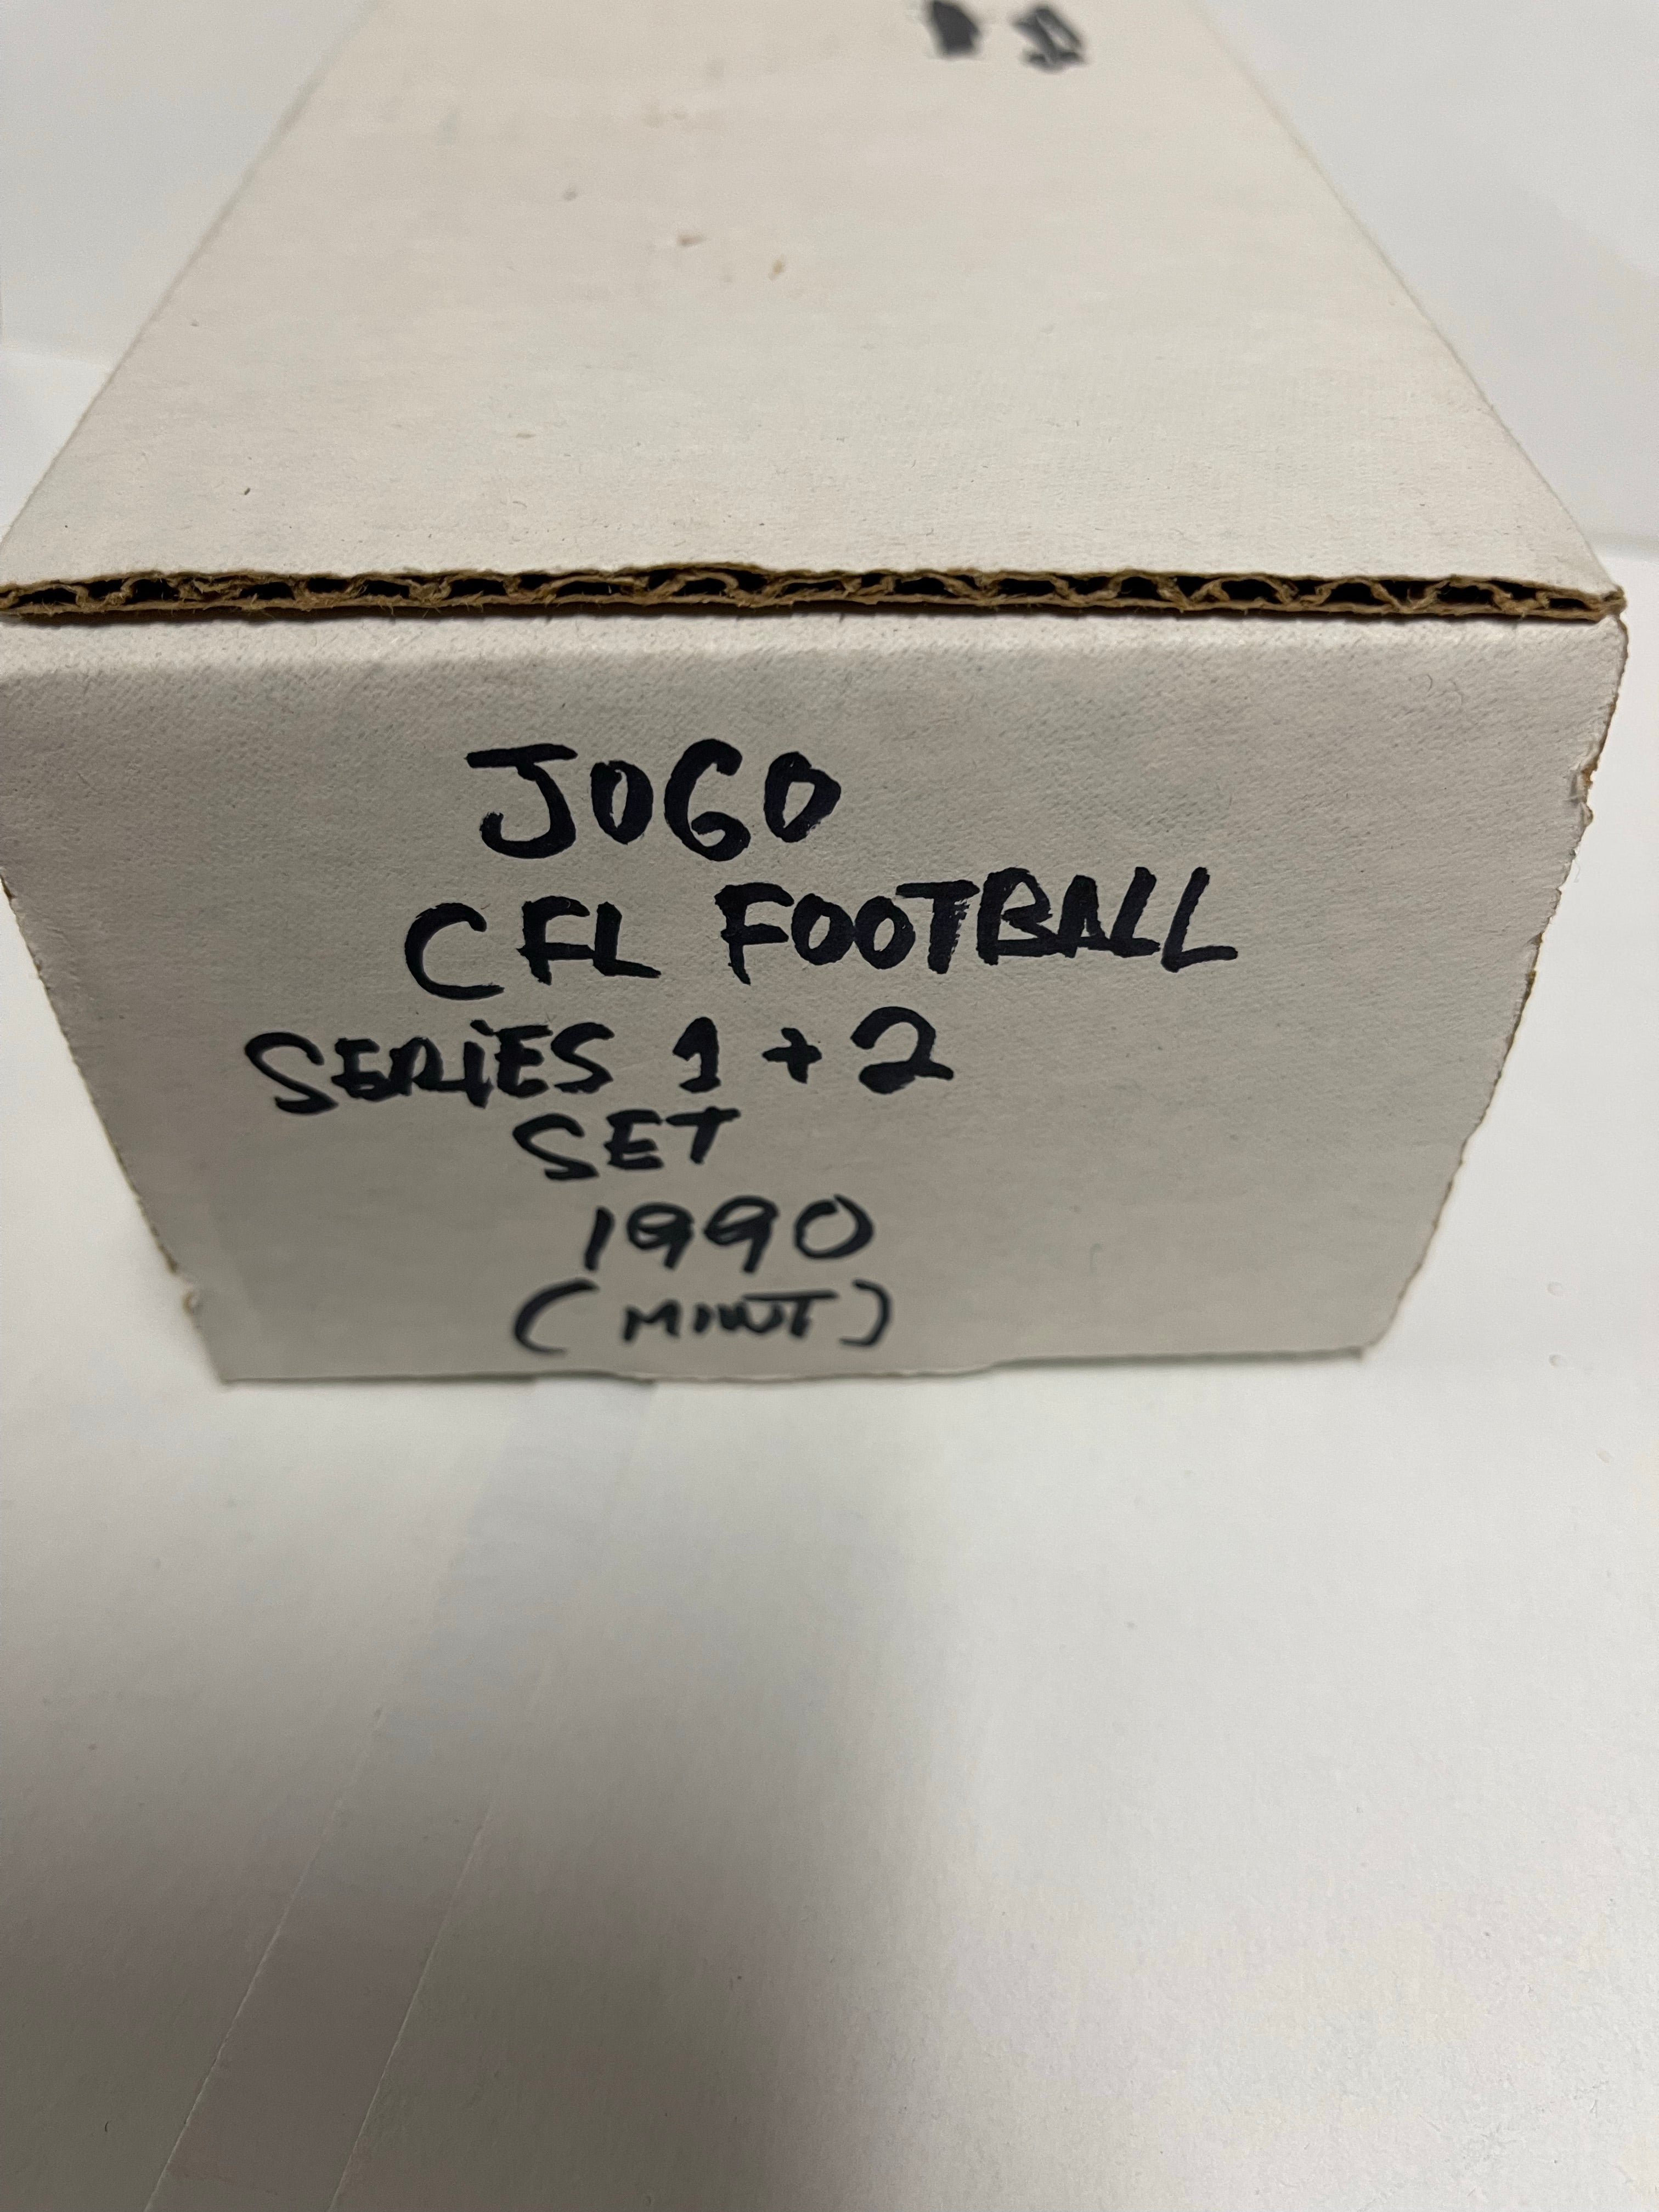 CFL Jogo football series 1 and 2 high grade cards set 1990